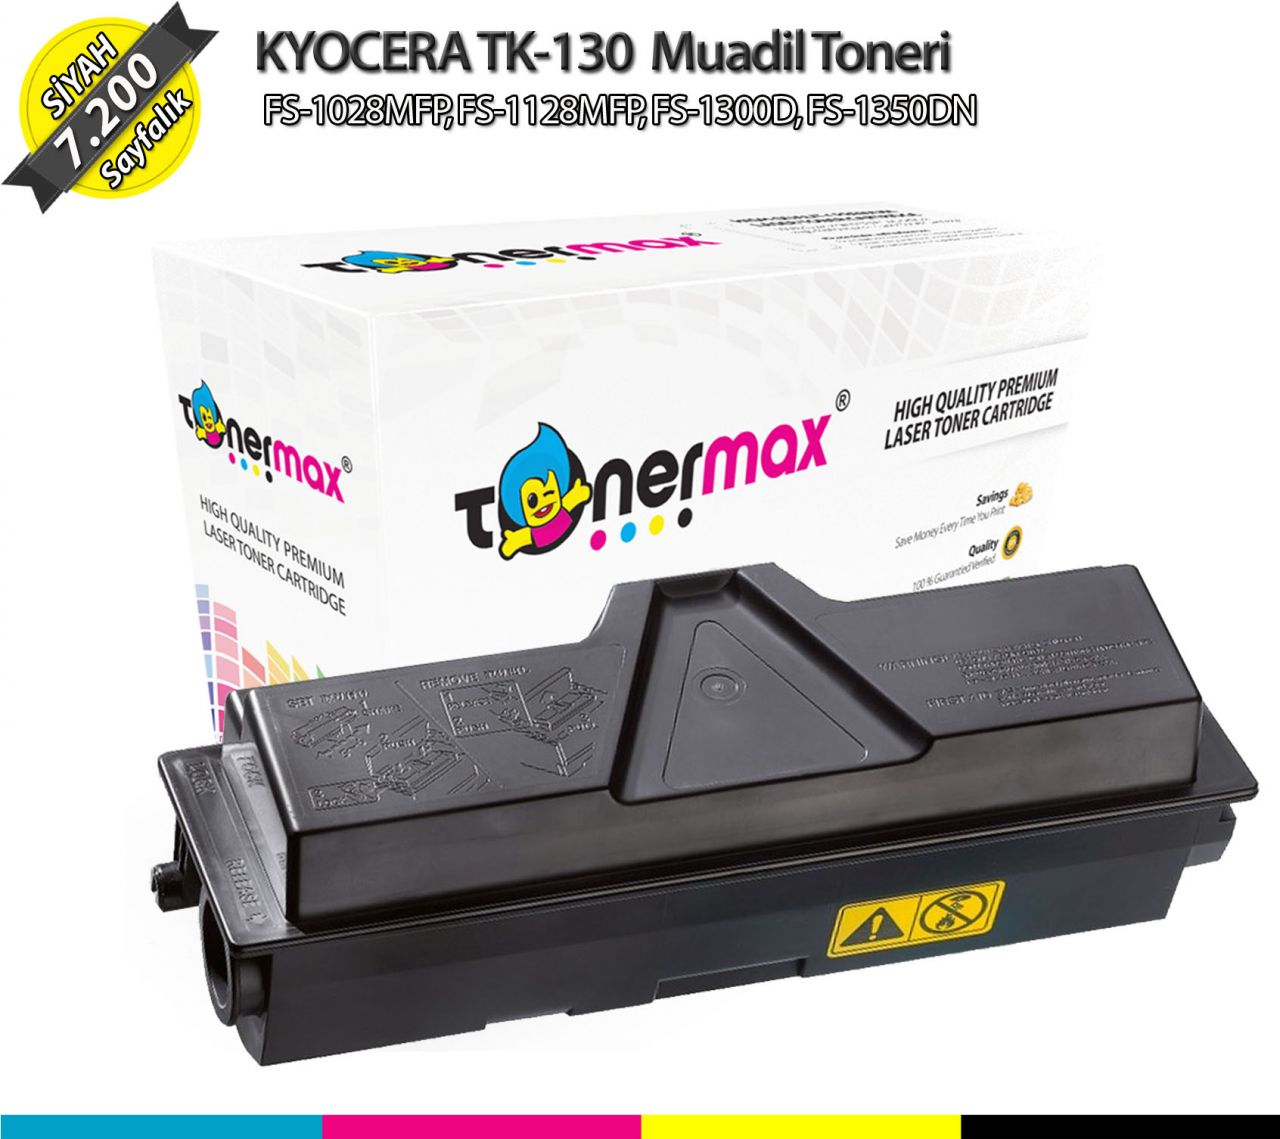 Kyocera TK-130 / FS1350 / FS1300 / FS1128 / FS1028 Muadil Toner